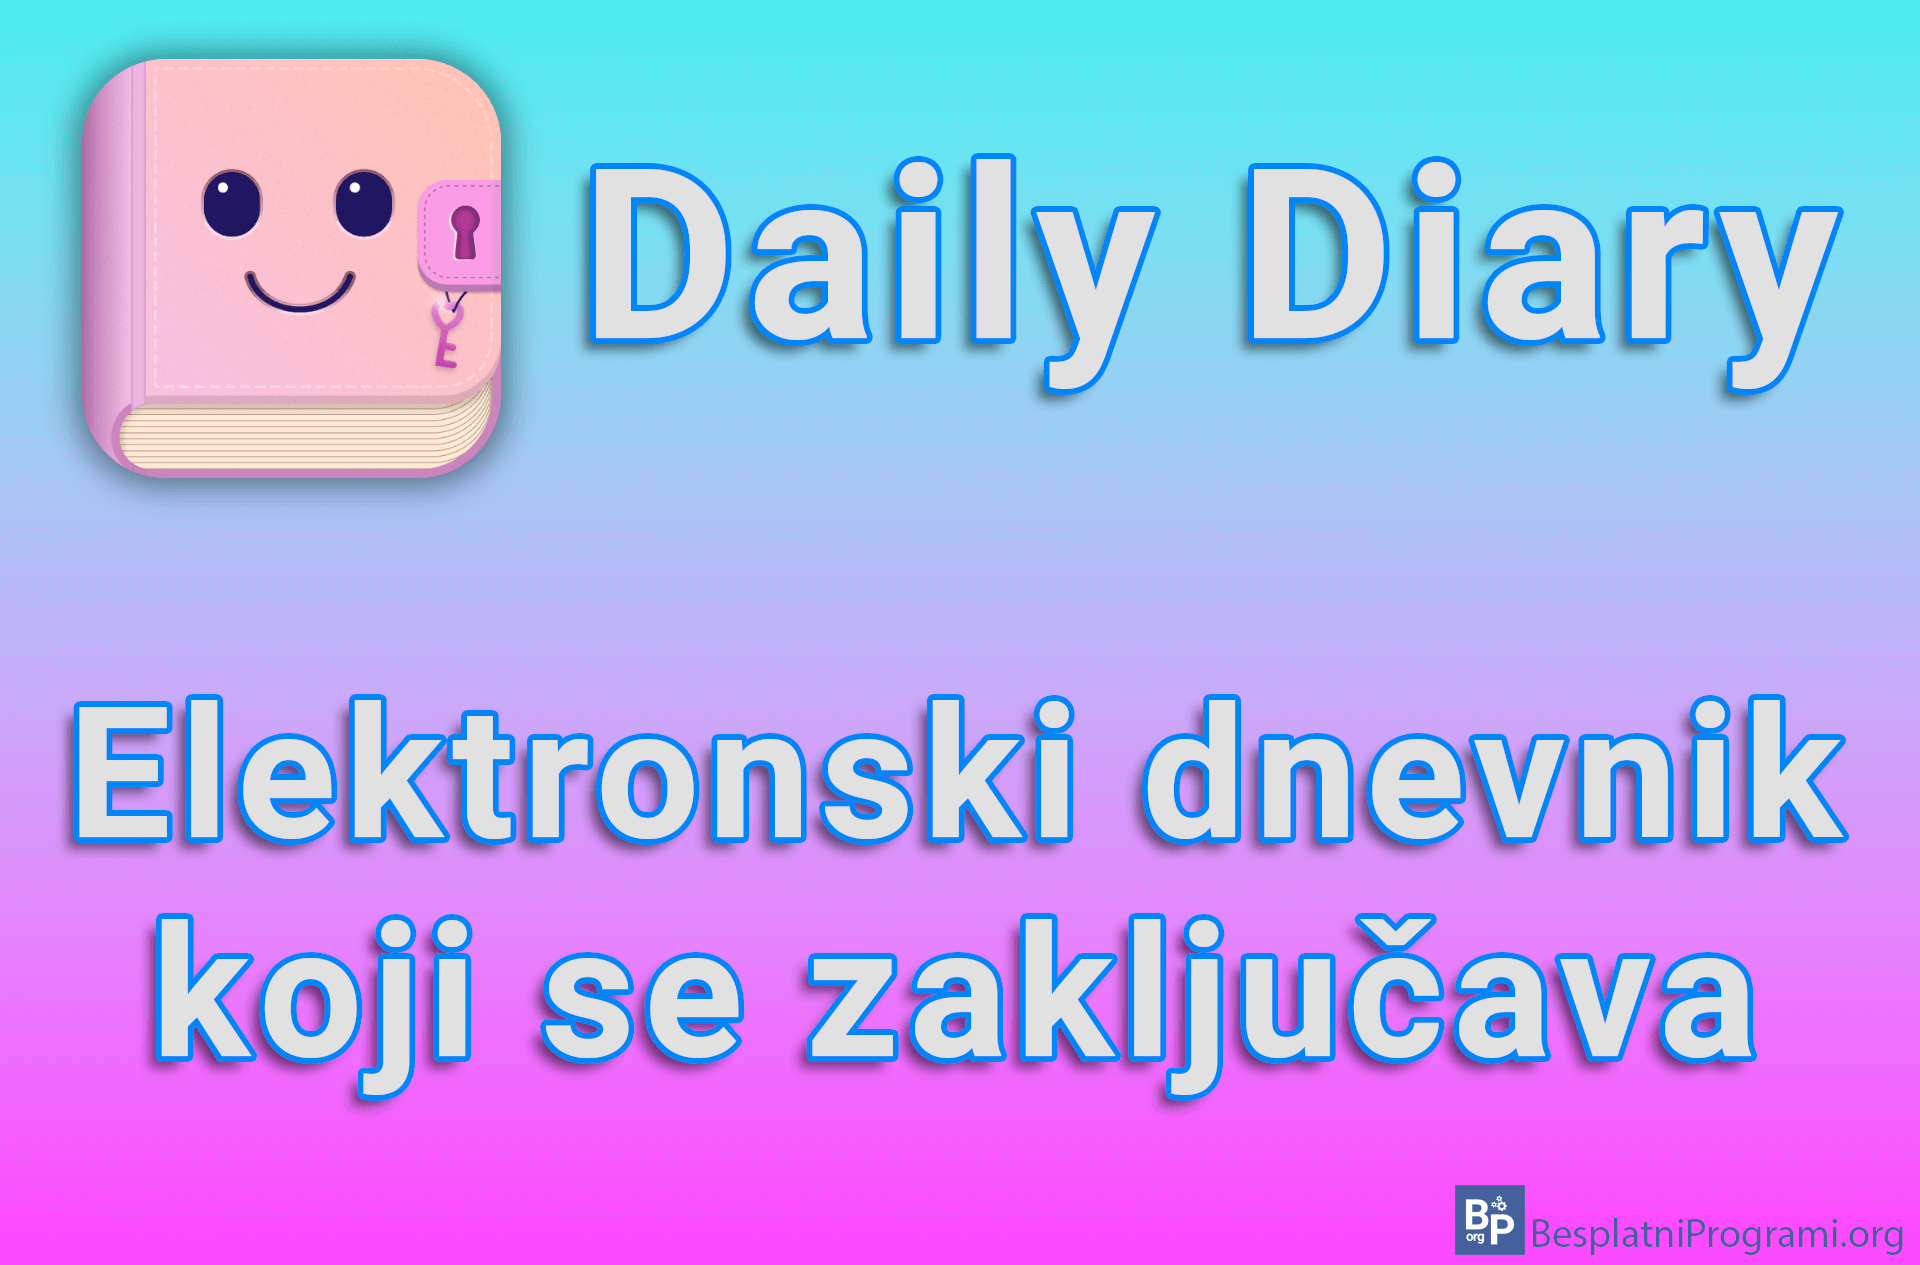 Daily Diary - Elektronski dnevnik koji se zaključava